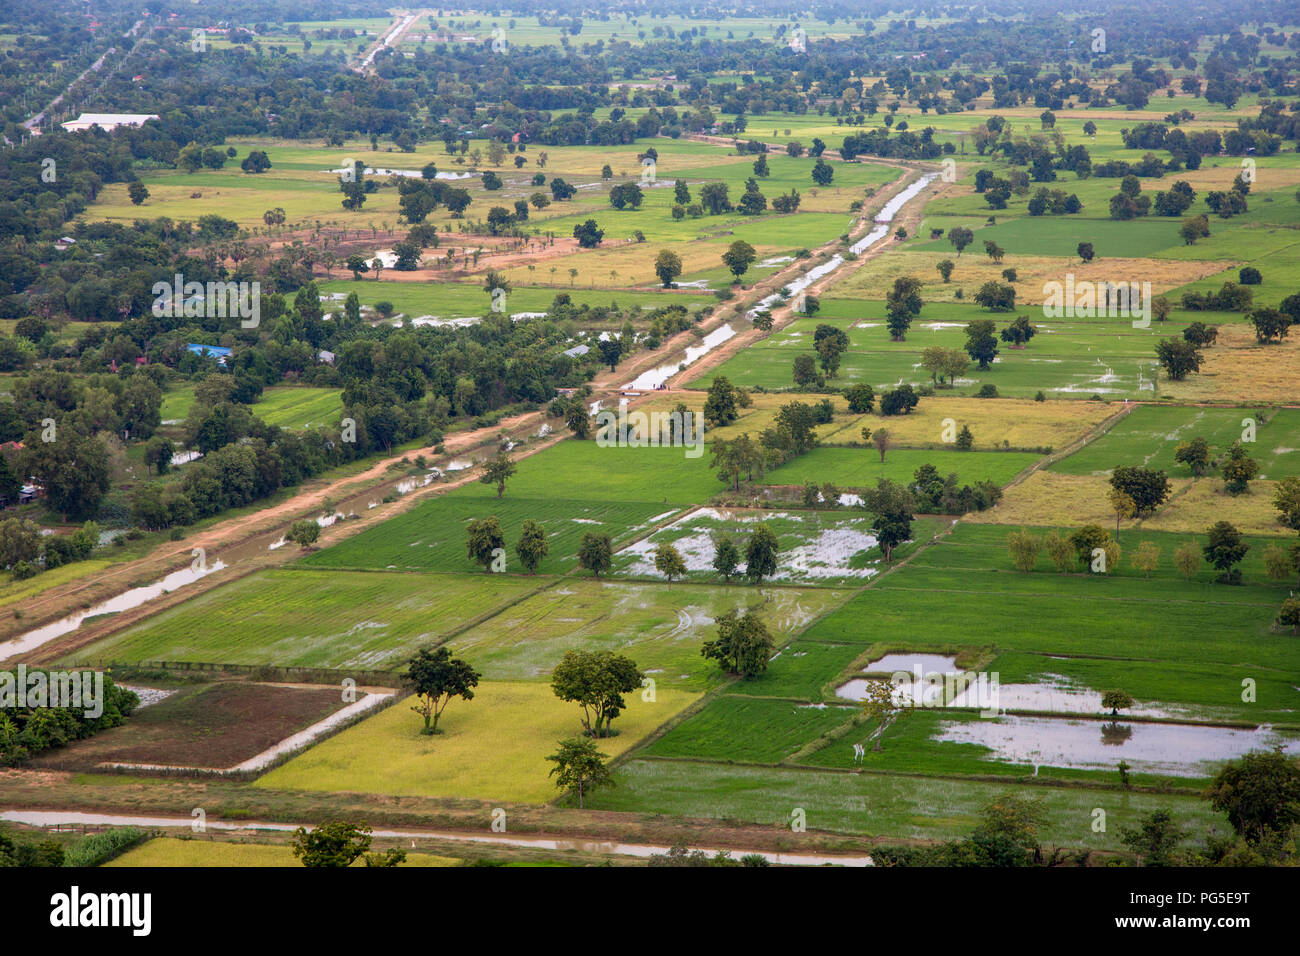 Farming landscape with rice paddy, fields and trees near Battambang, Cambodia Stock Photo